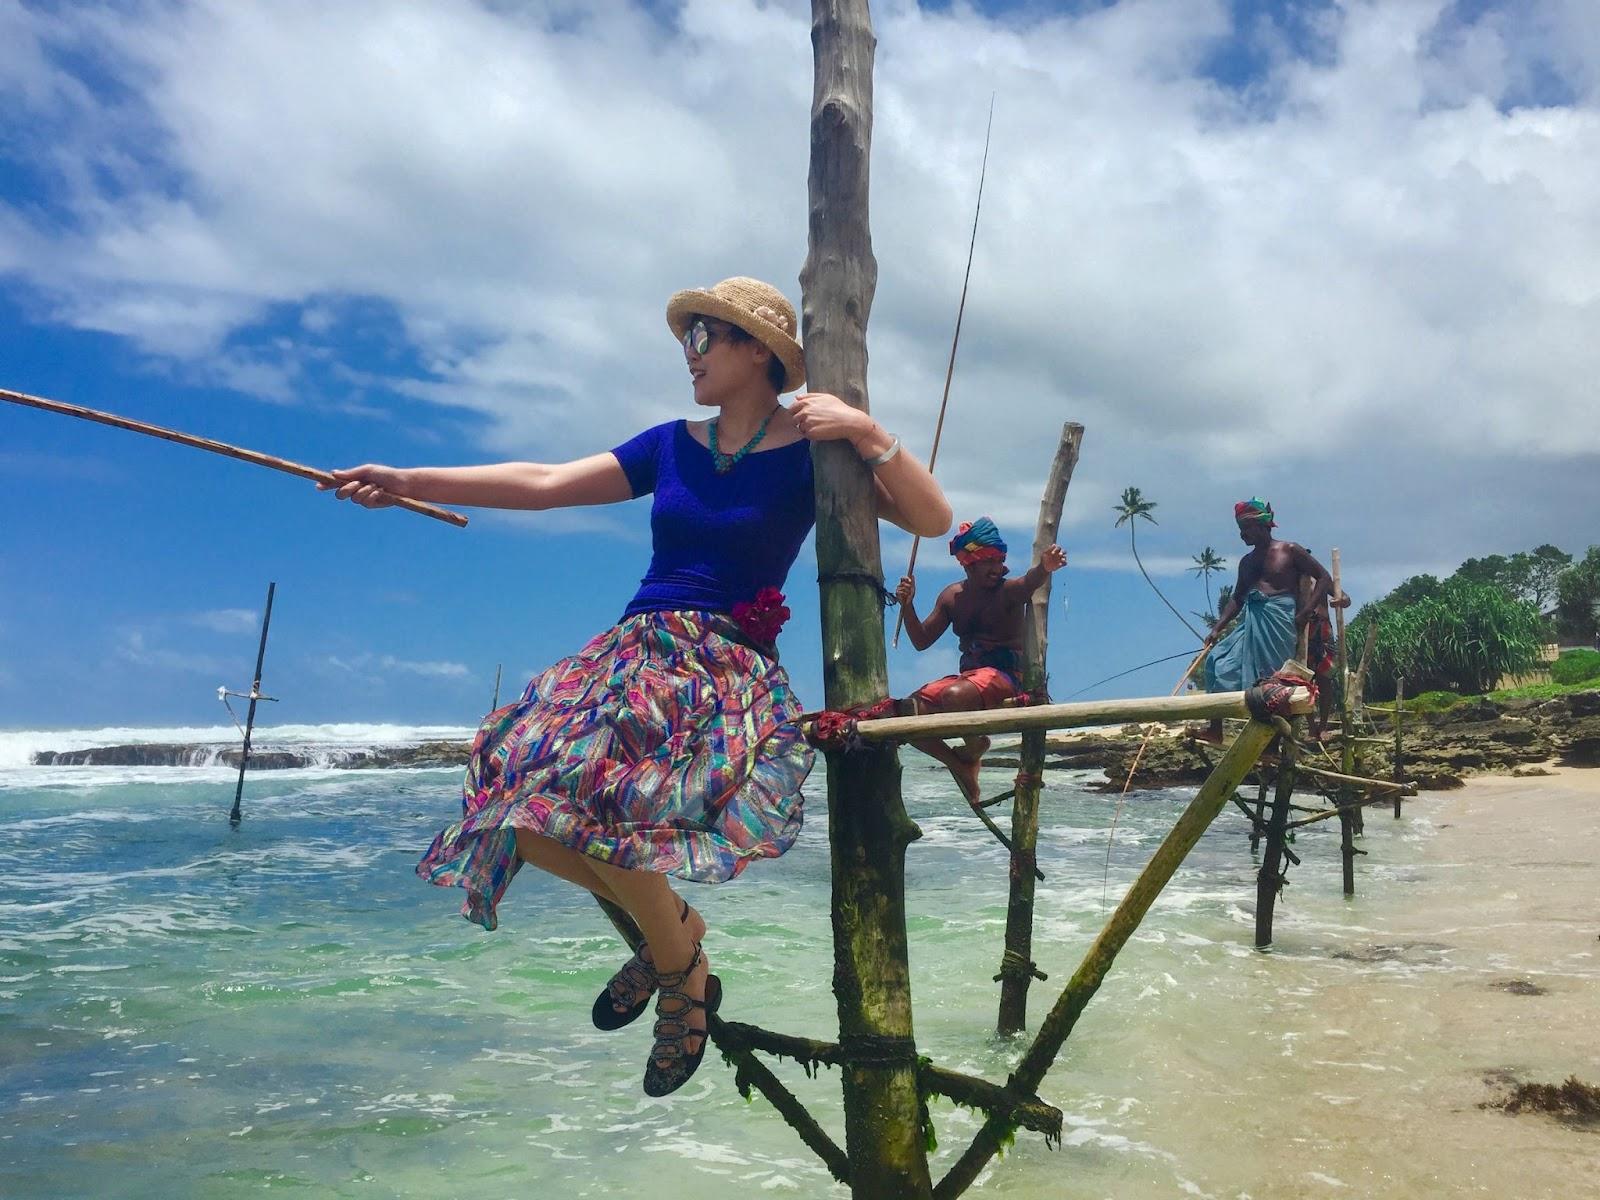 A lady stilt fishing on the beach of Sri Lanka alongside locals.